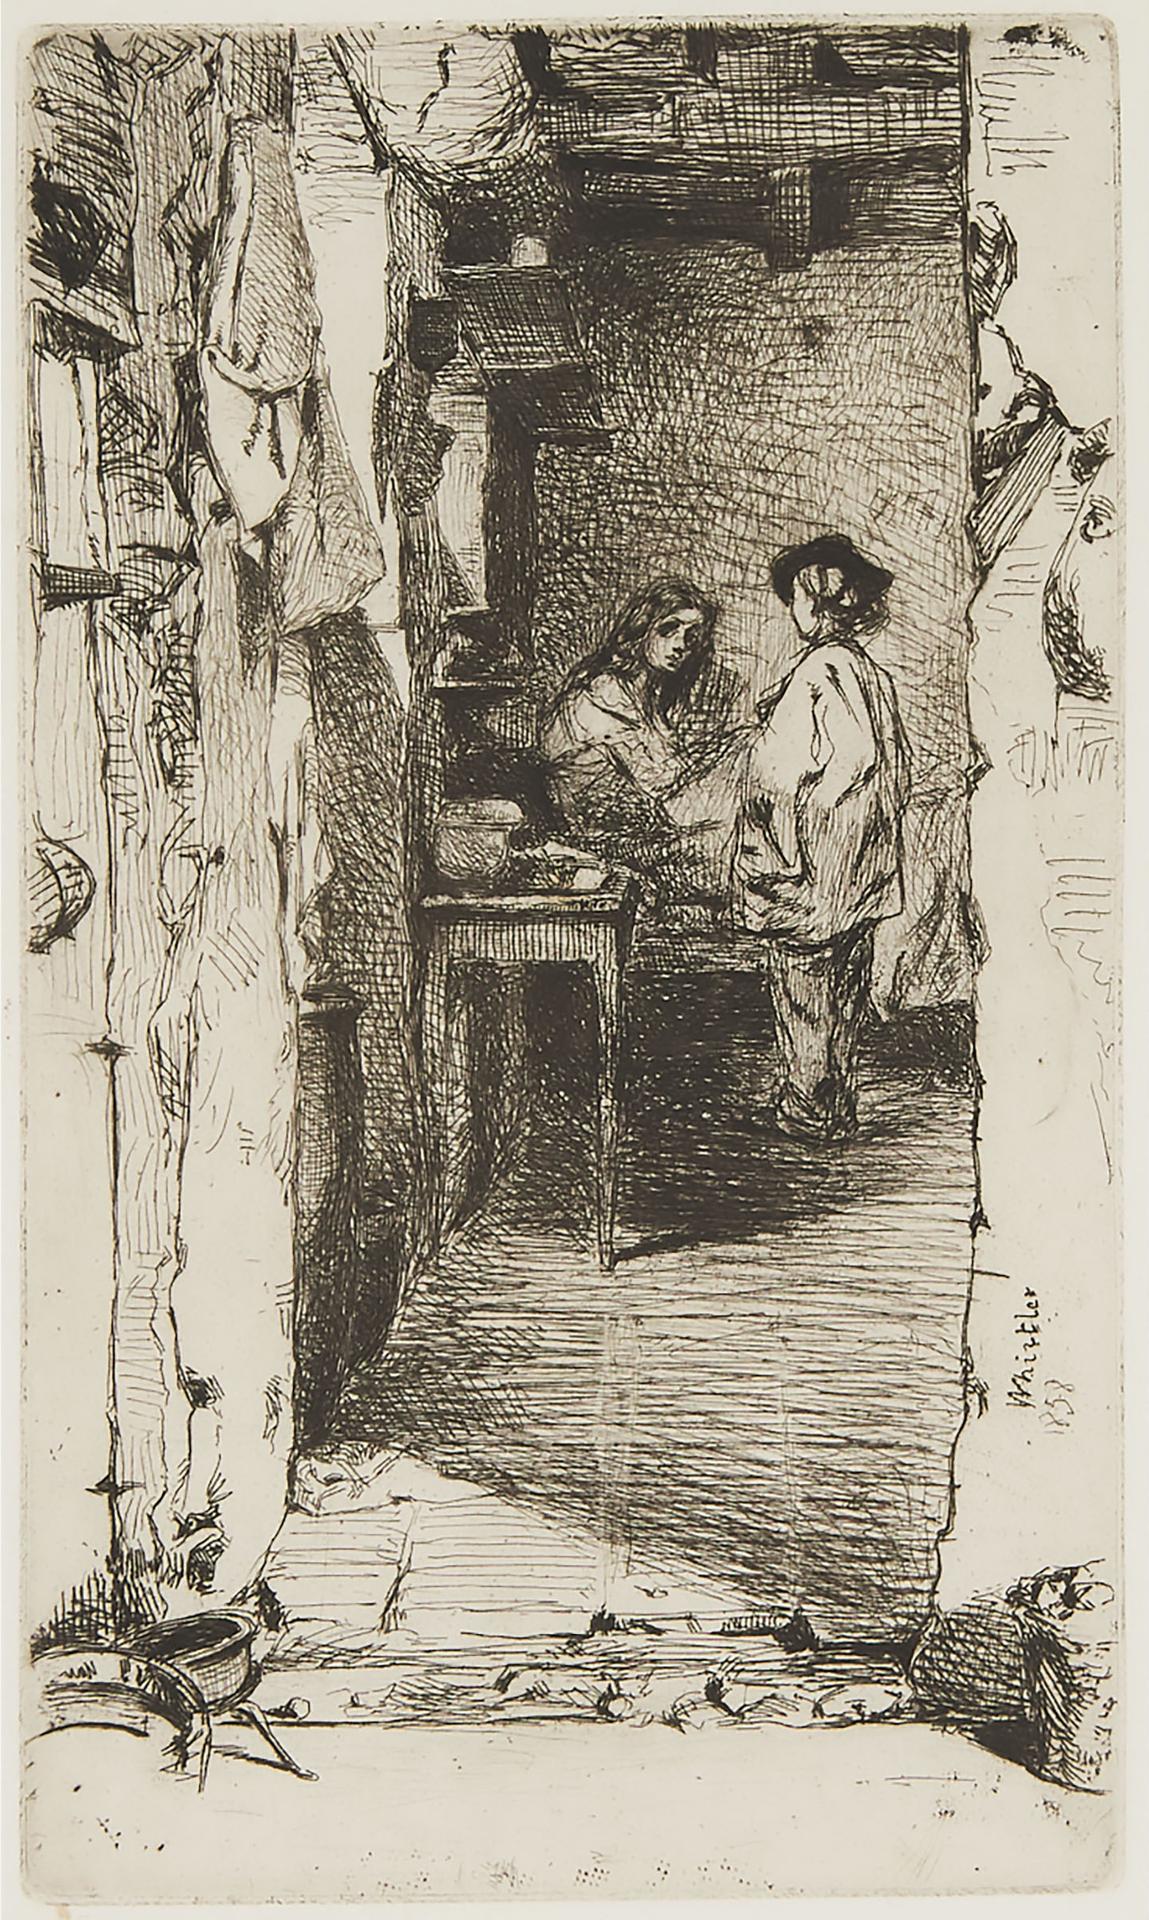 James Abbott McNeill Whistler (1834-1903) - The Rag Gatherers, 1858 [kennedy, 23v; Glasgow, 29]